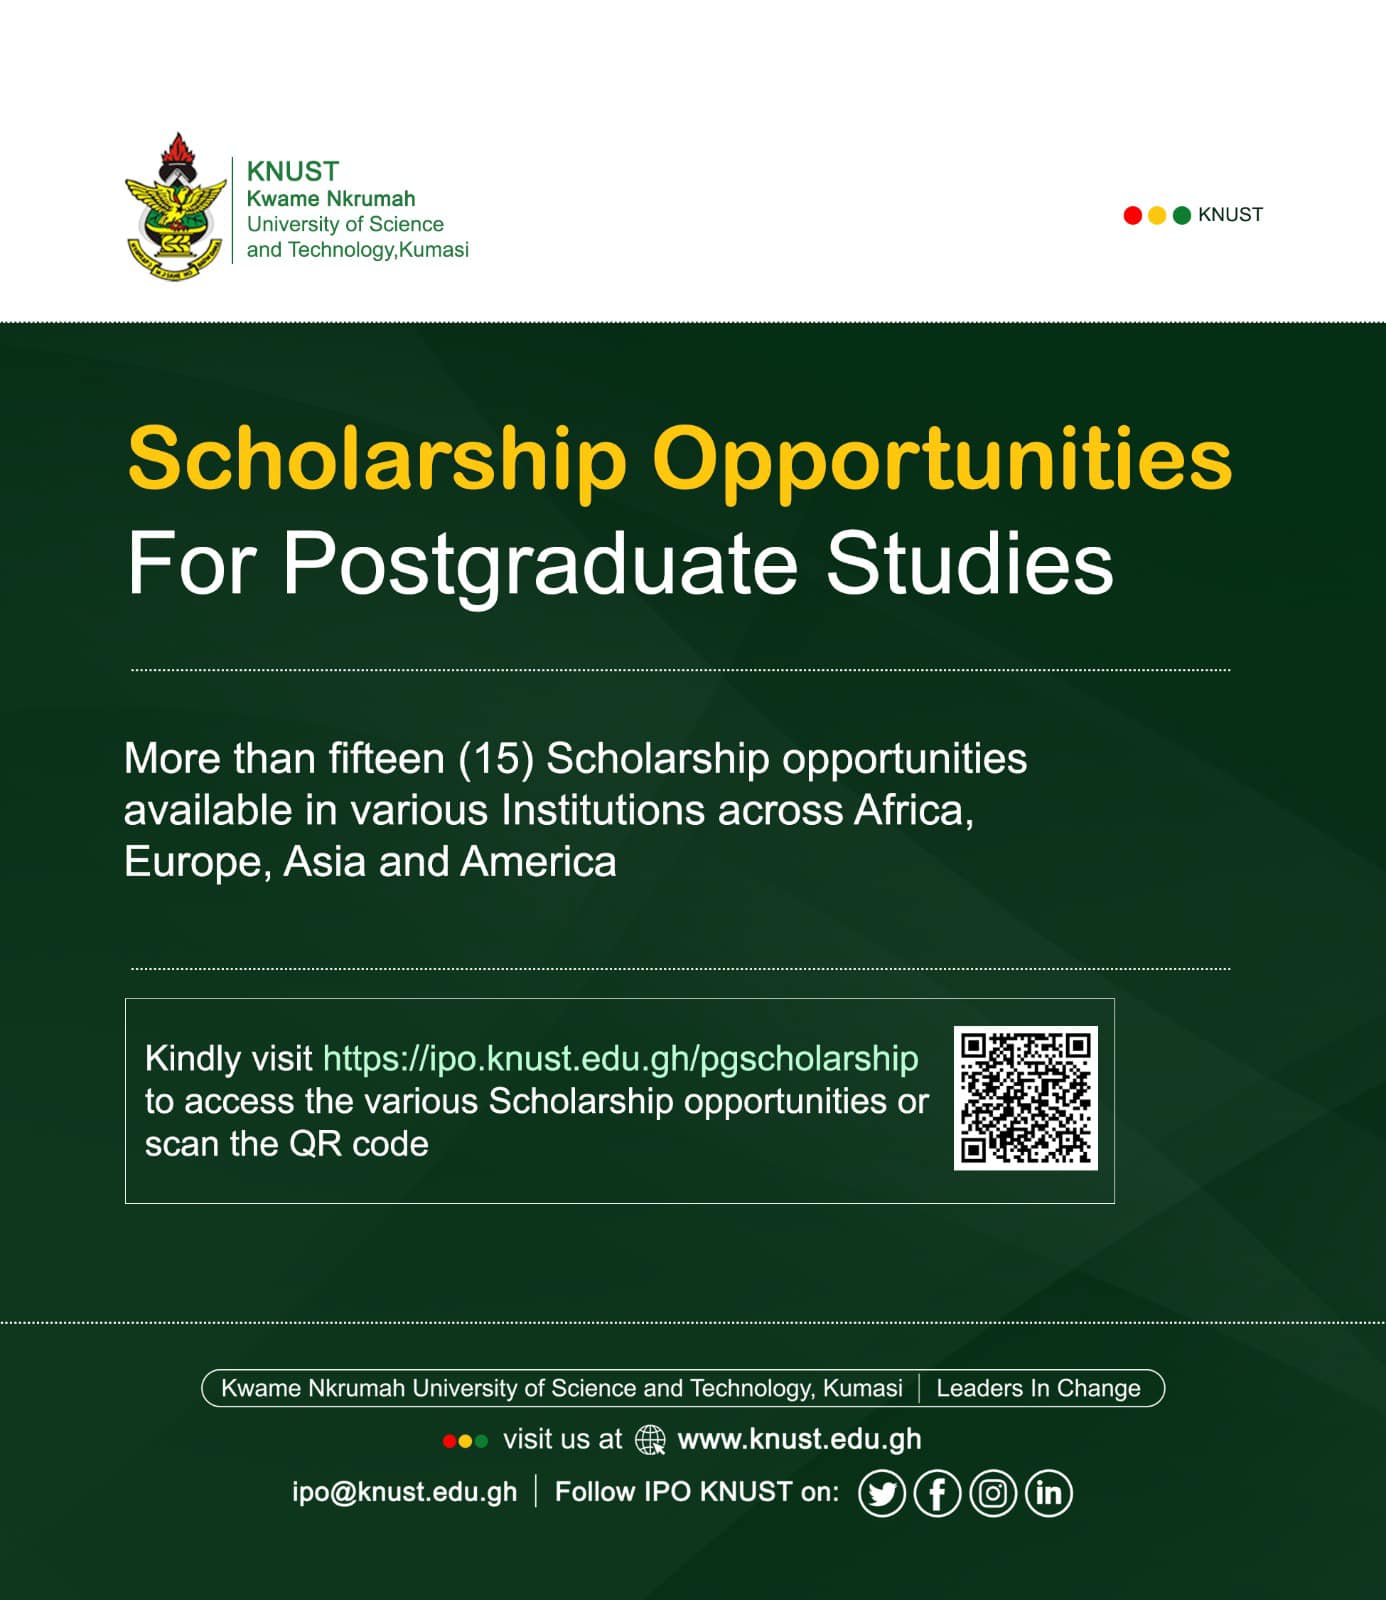 Scholarship Opportunities for Postgraduate Students